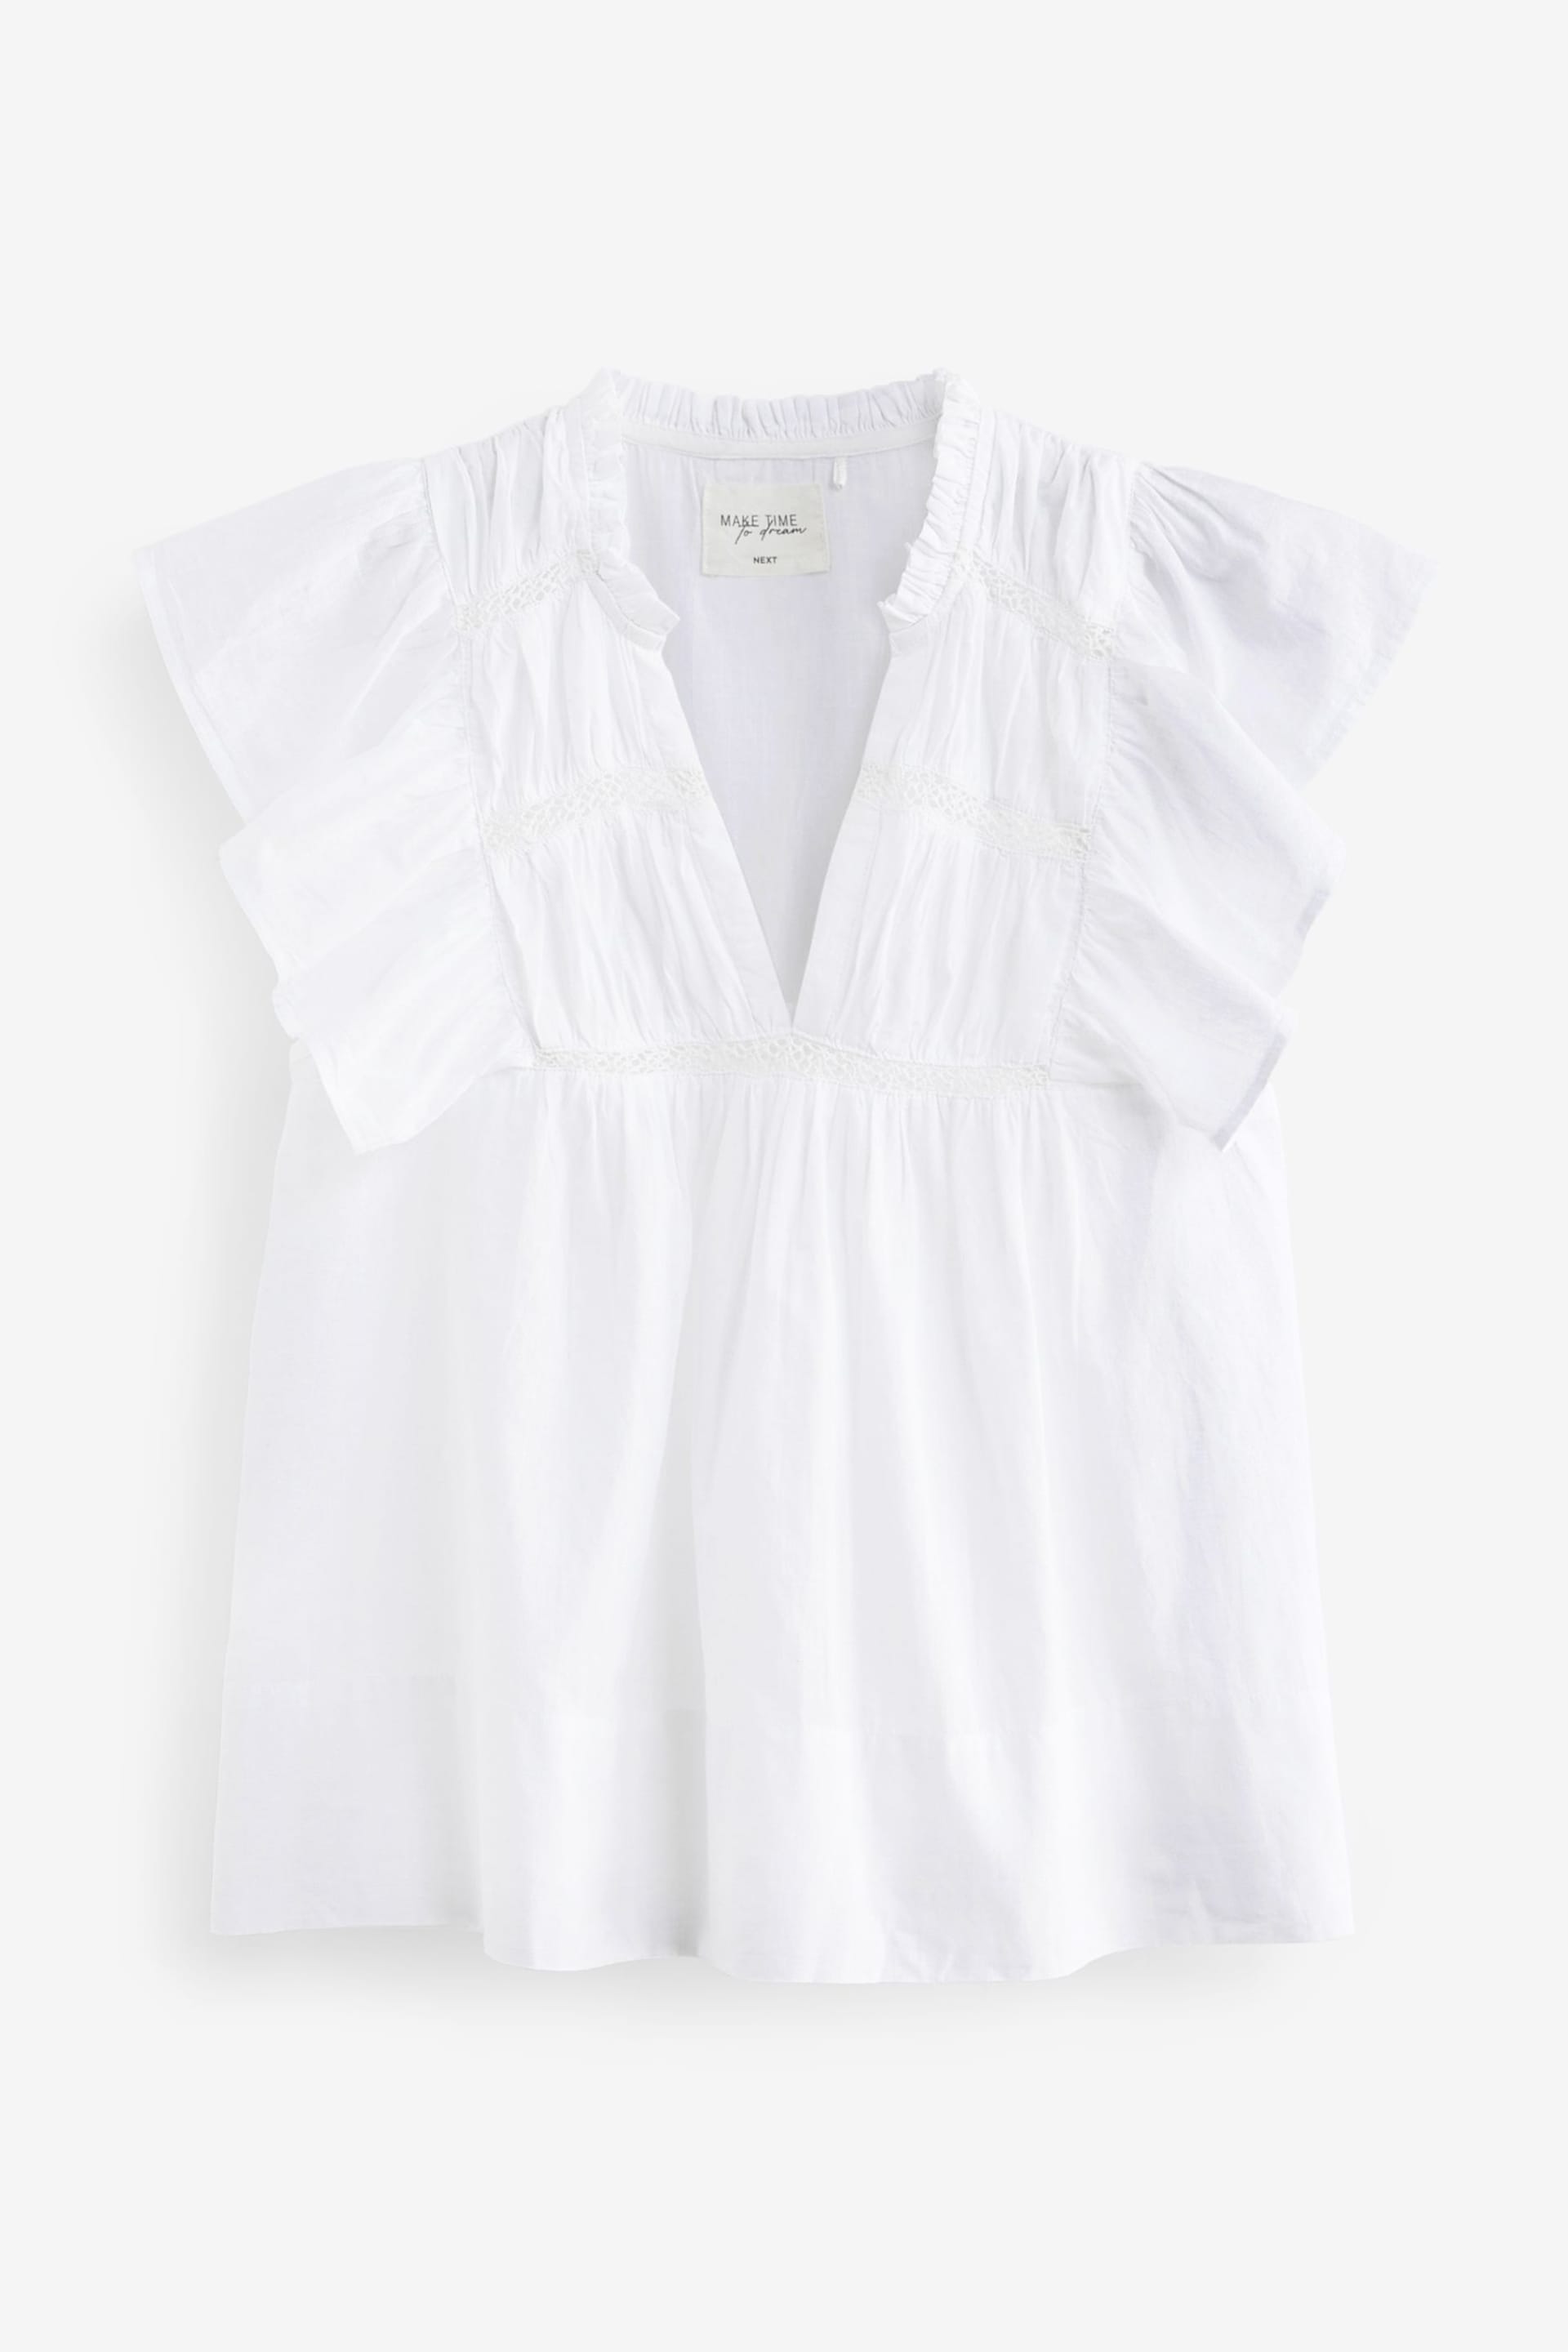 White Lightweight Cotton Short Set Pyjamas - Image 8 of 10